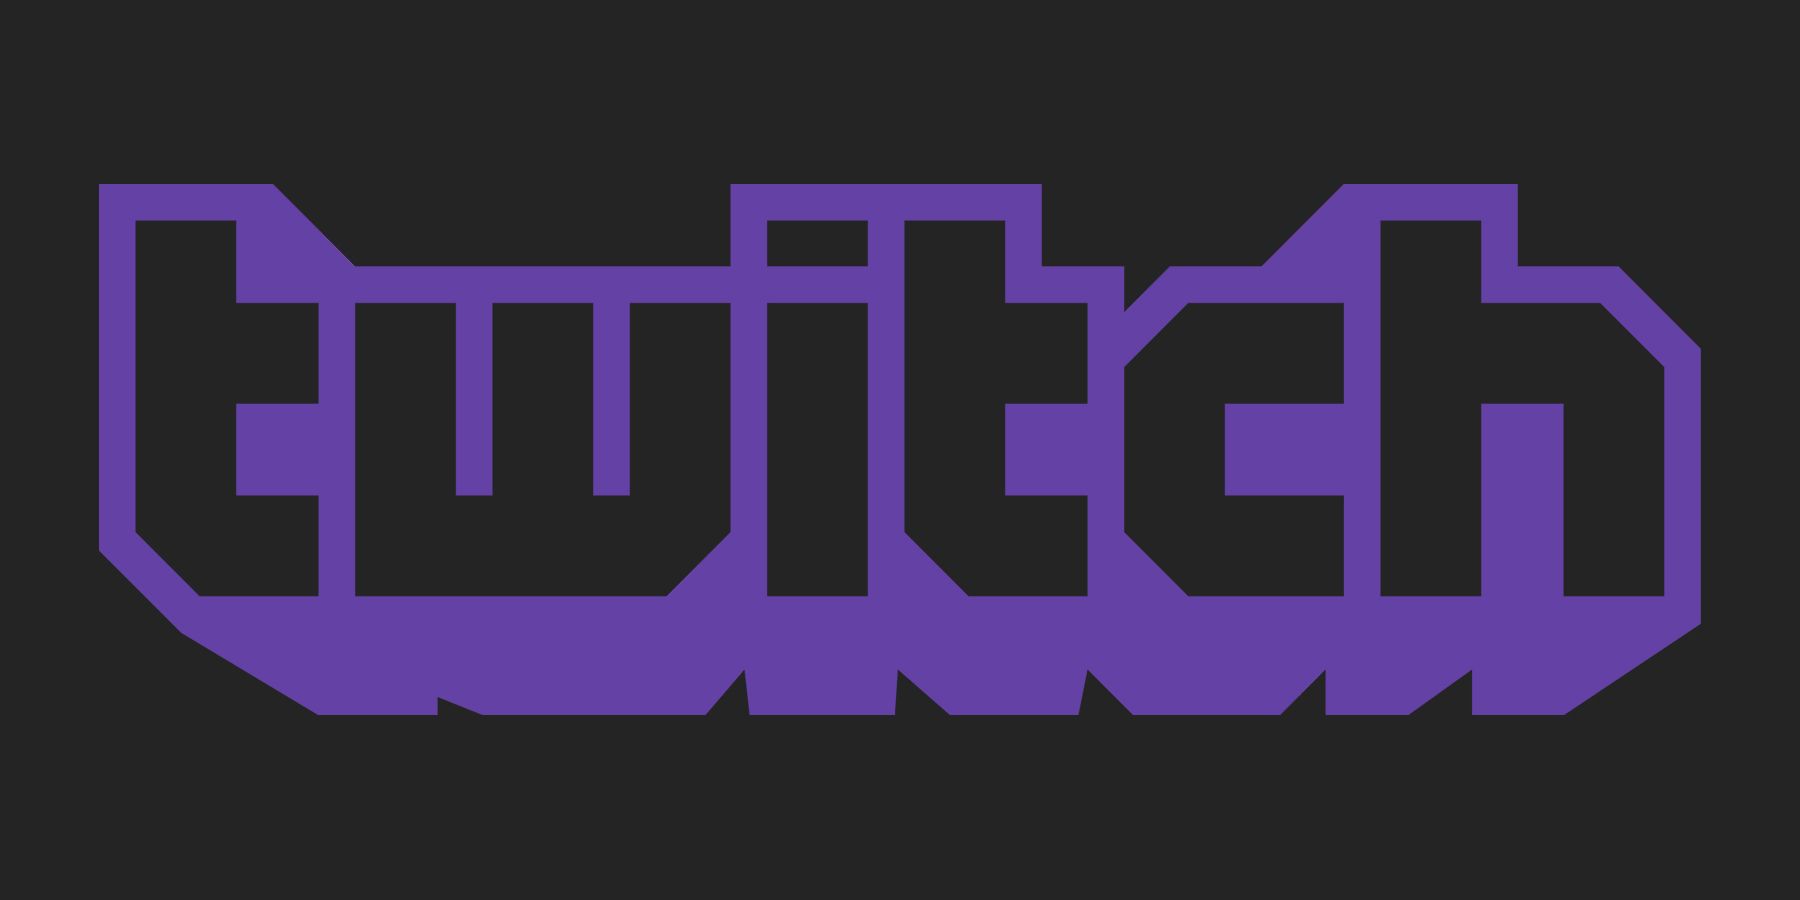 purple twitch logo on black background